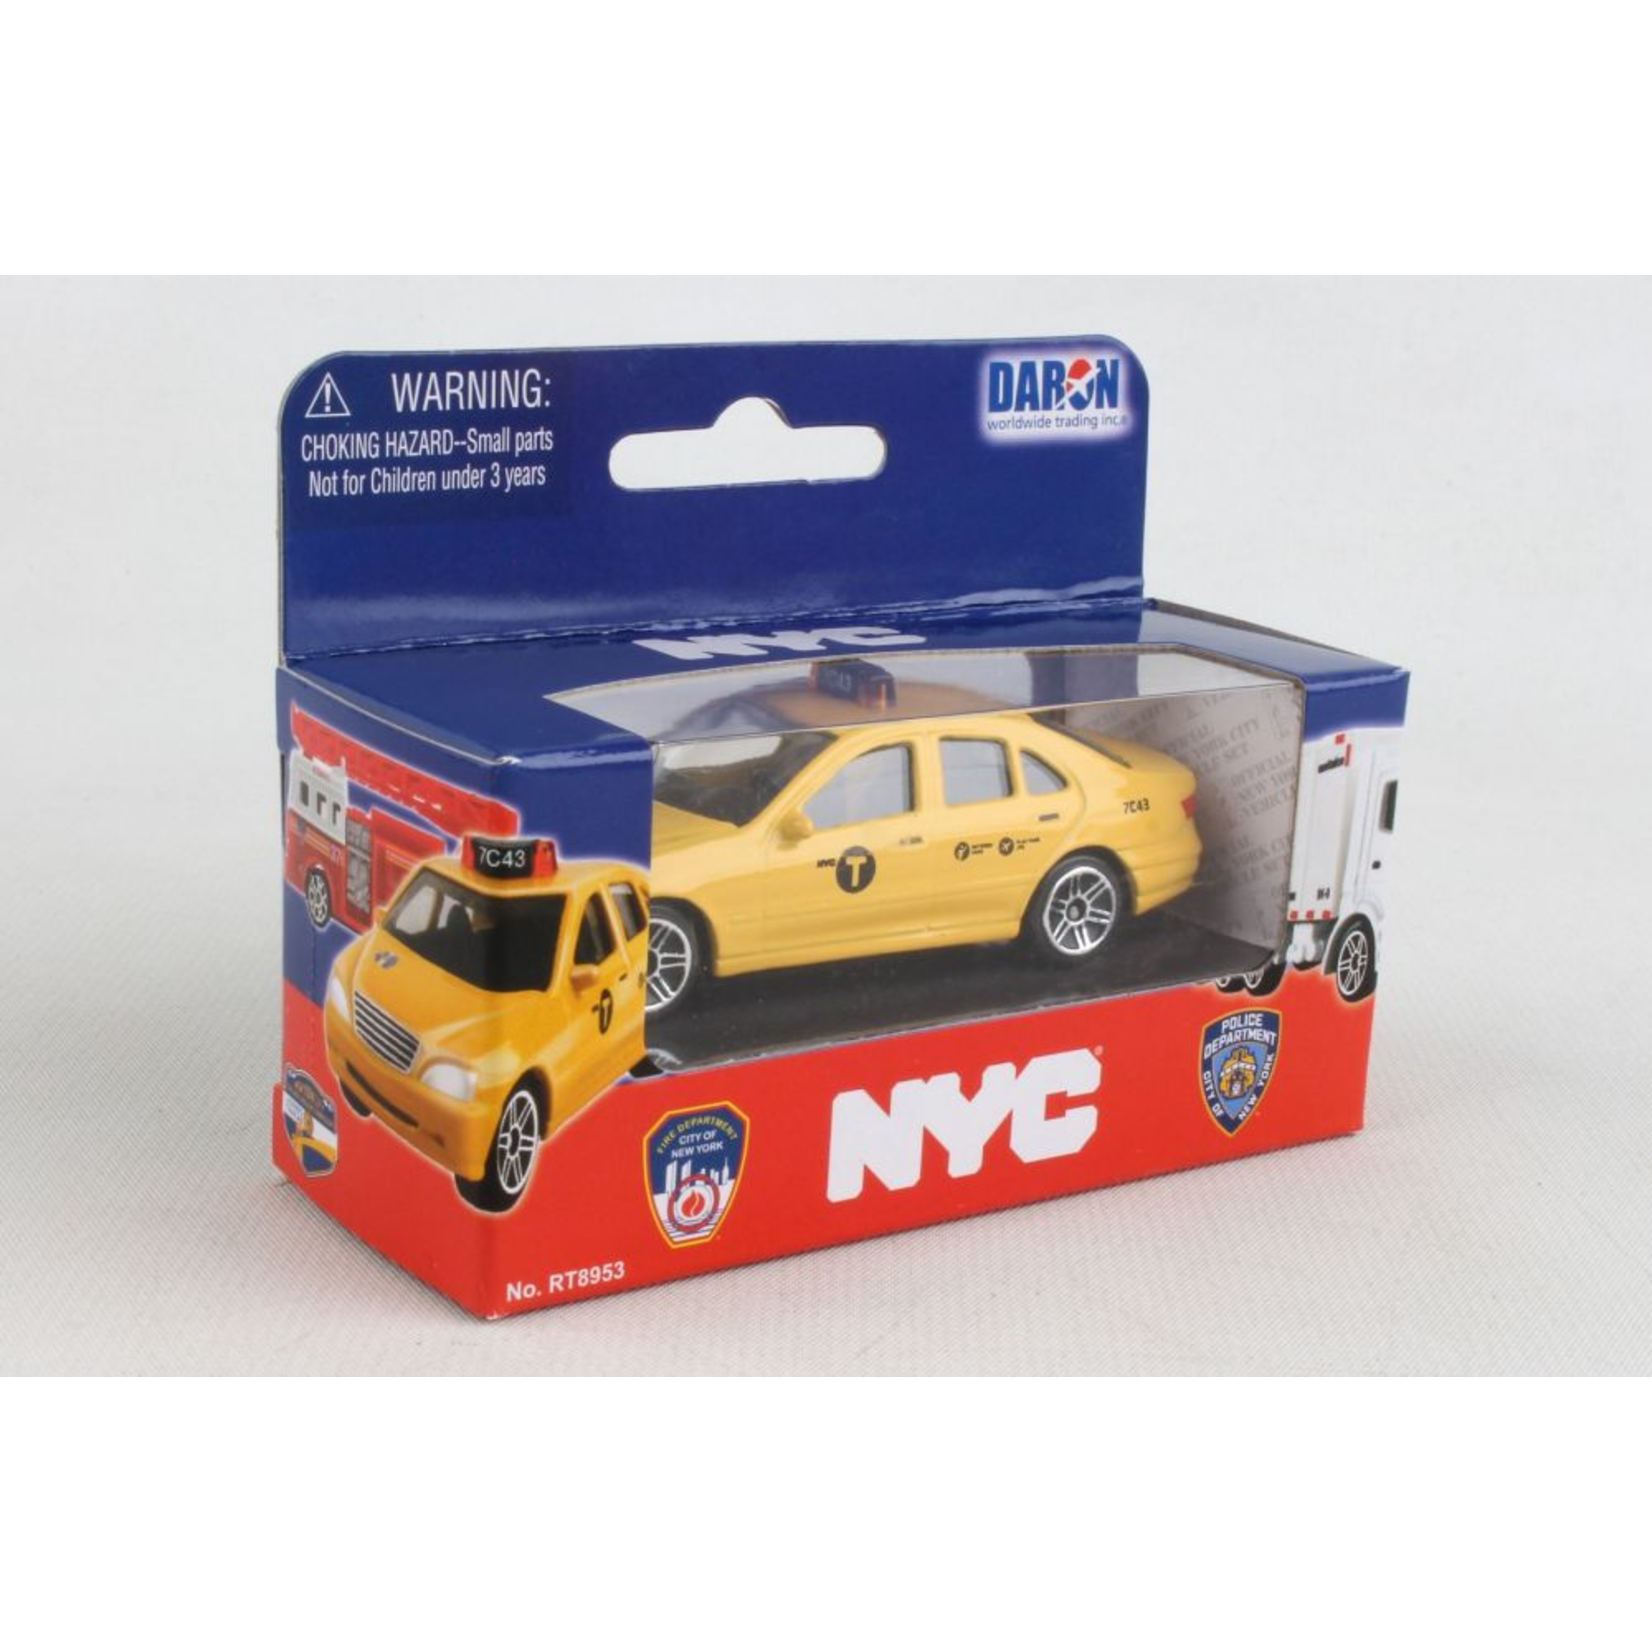 Daron NYC Taxi - Small